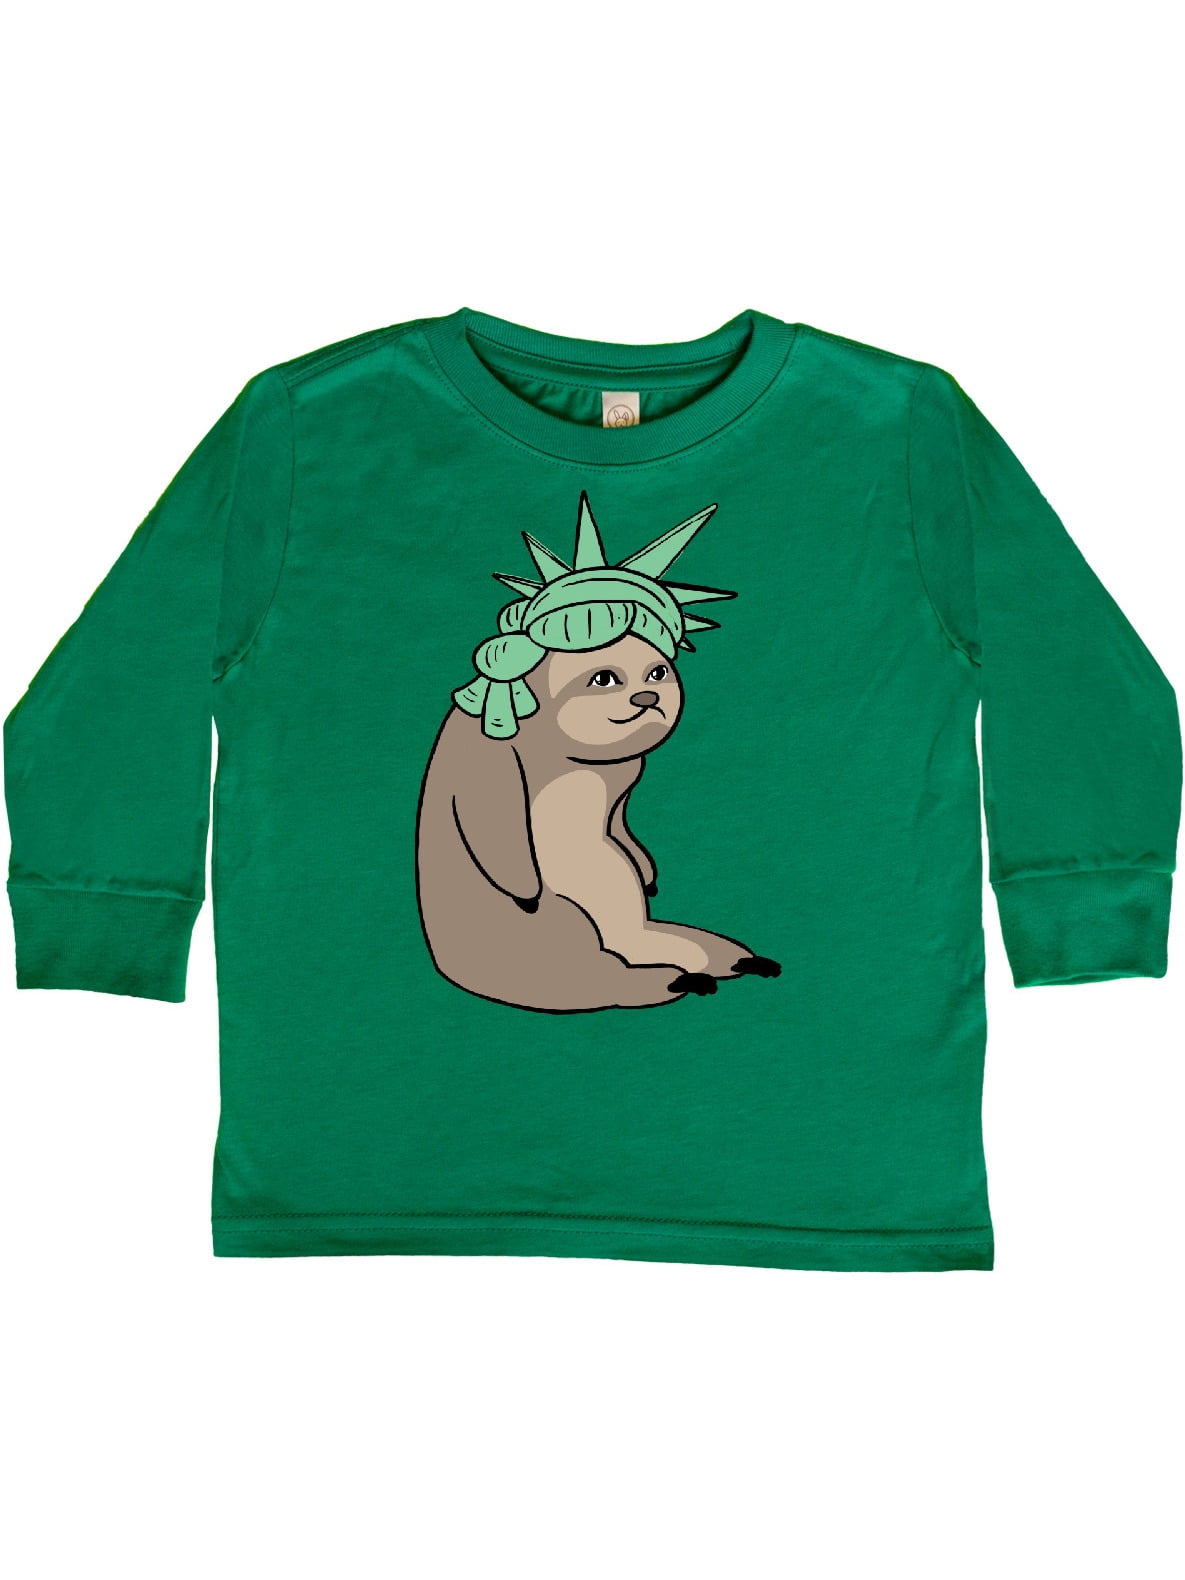 Awesomest Sloth Lovers October Birthday Unisex Sweatshirt tee 